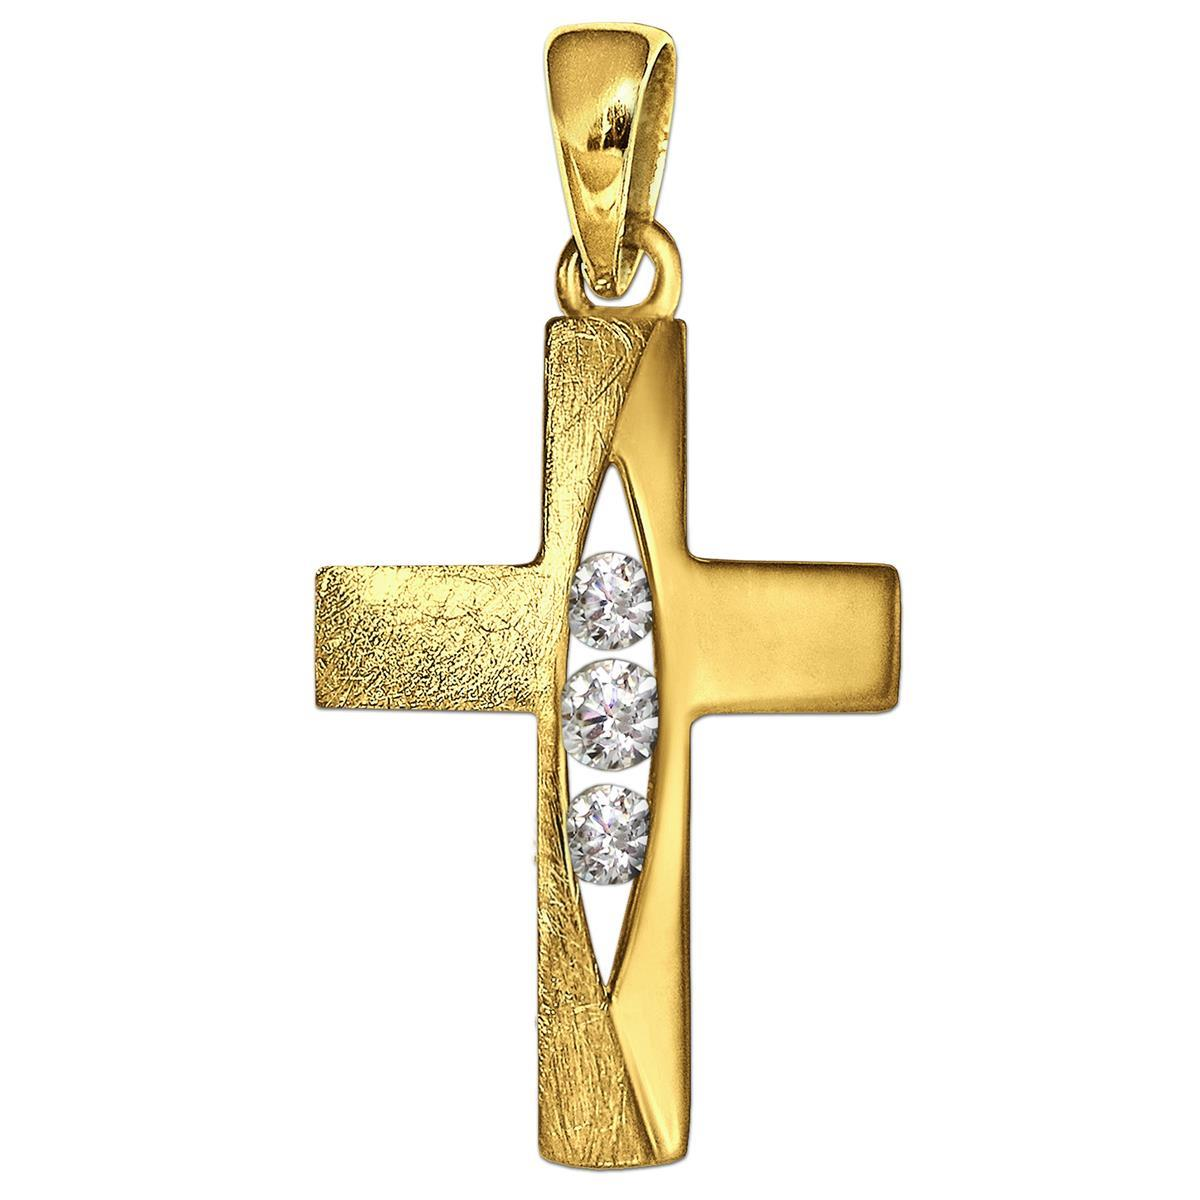 Goldenes Kreuz 16 mm offen mit 3 Zirkonia glänzend matt gemustert 333 GOLD 8 KARAT